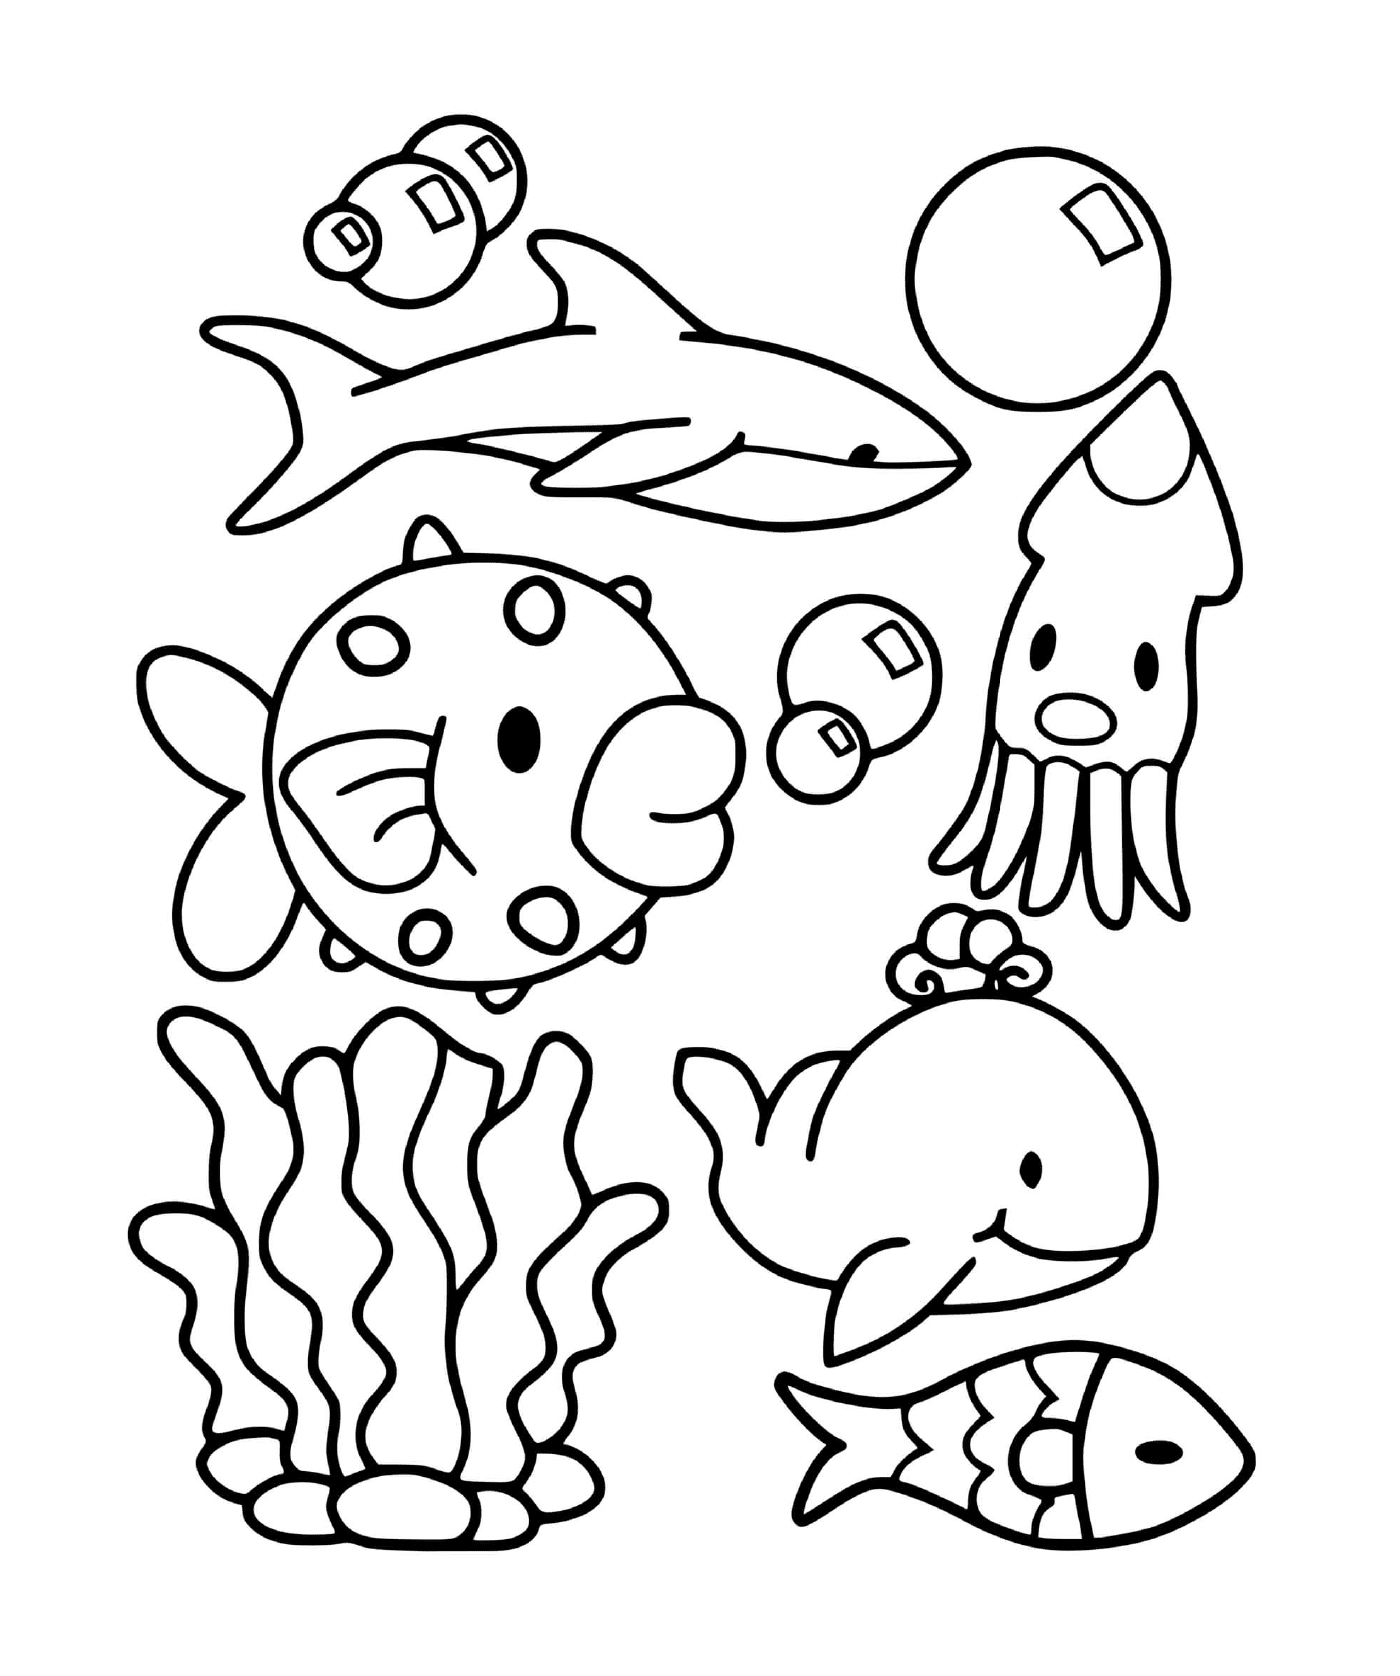  a group of marine animals 